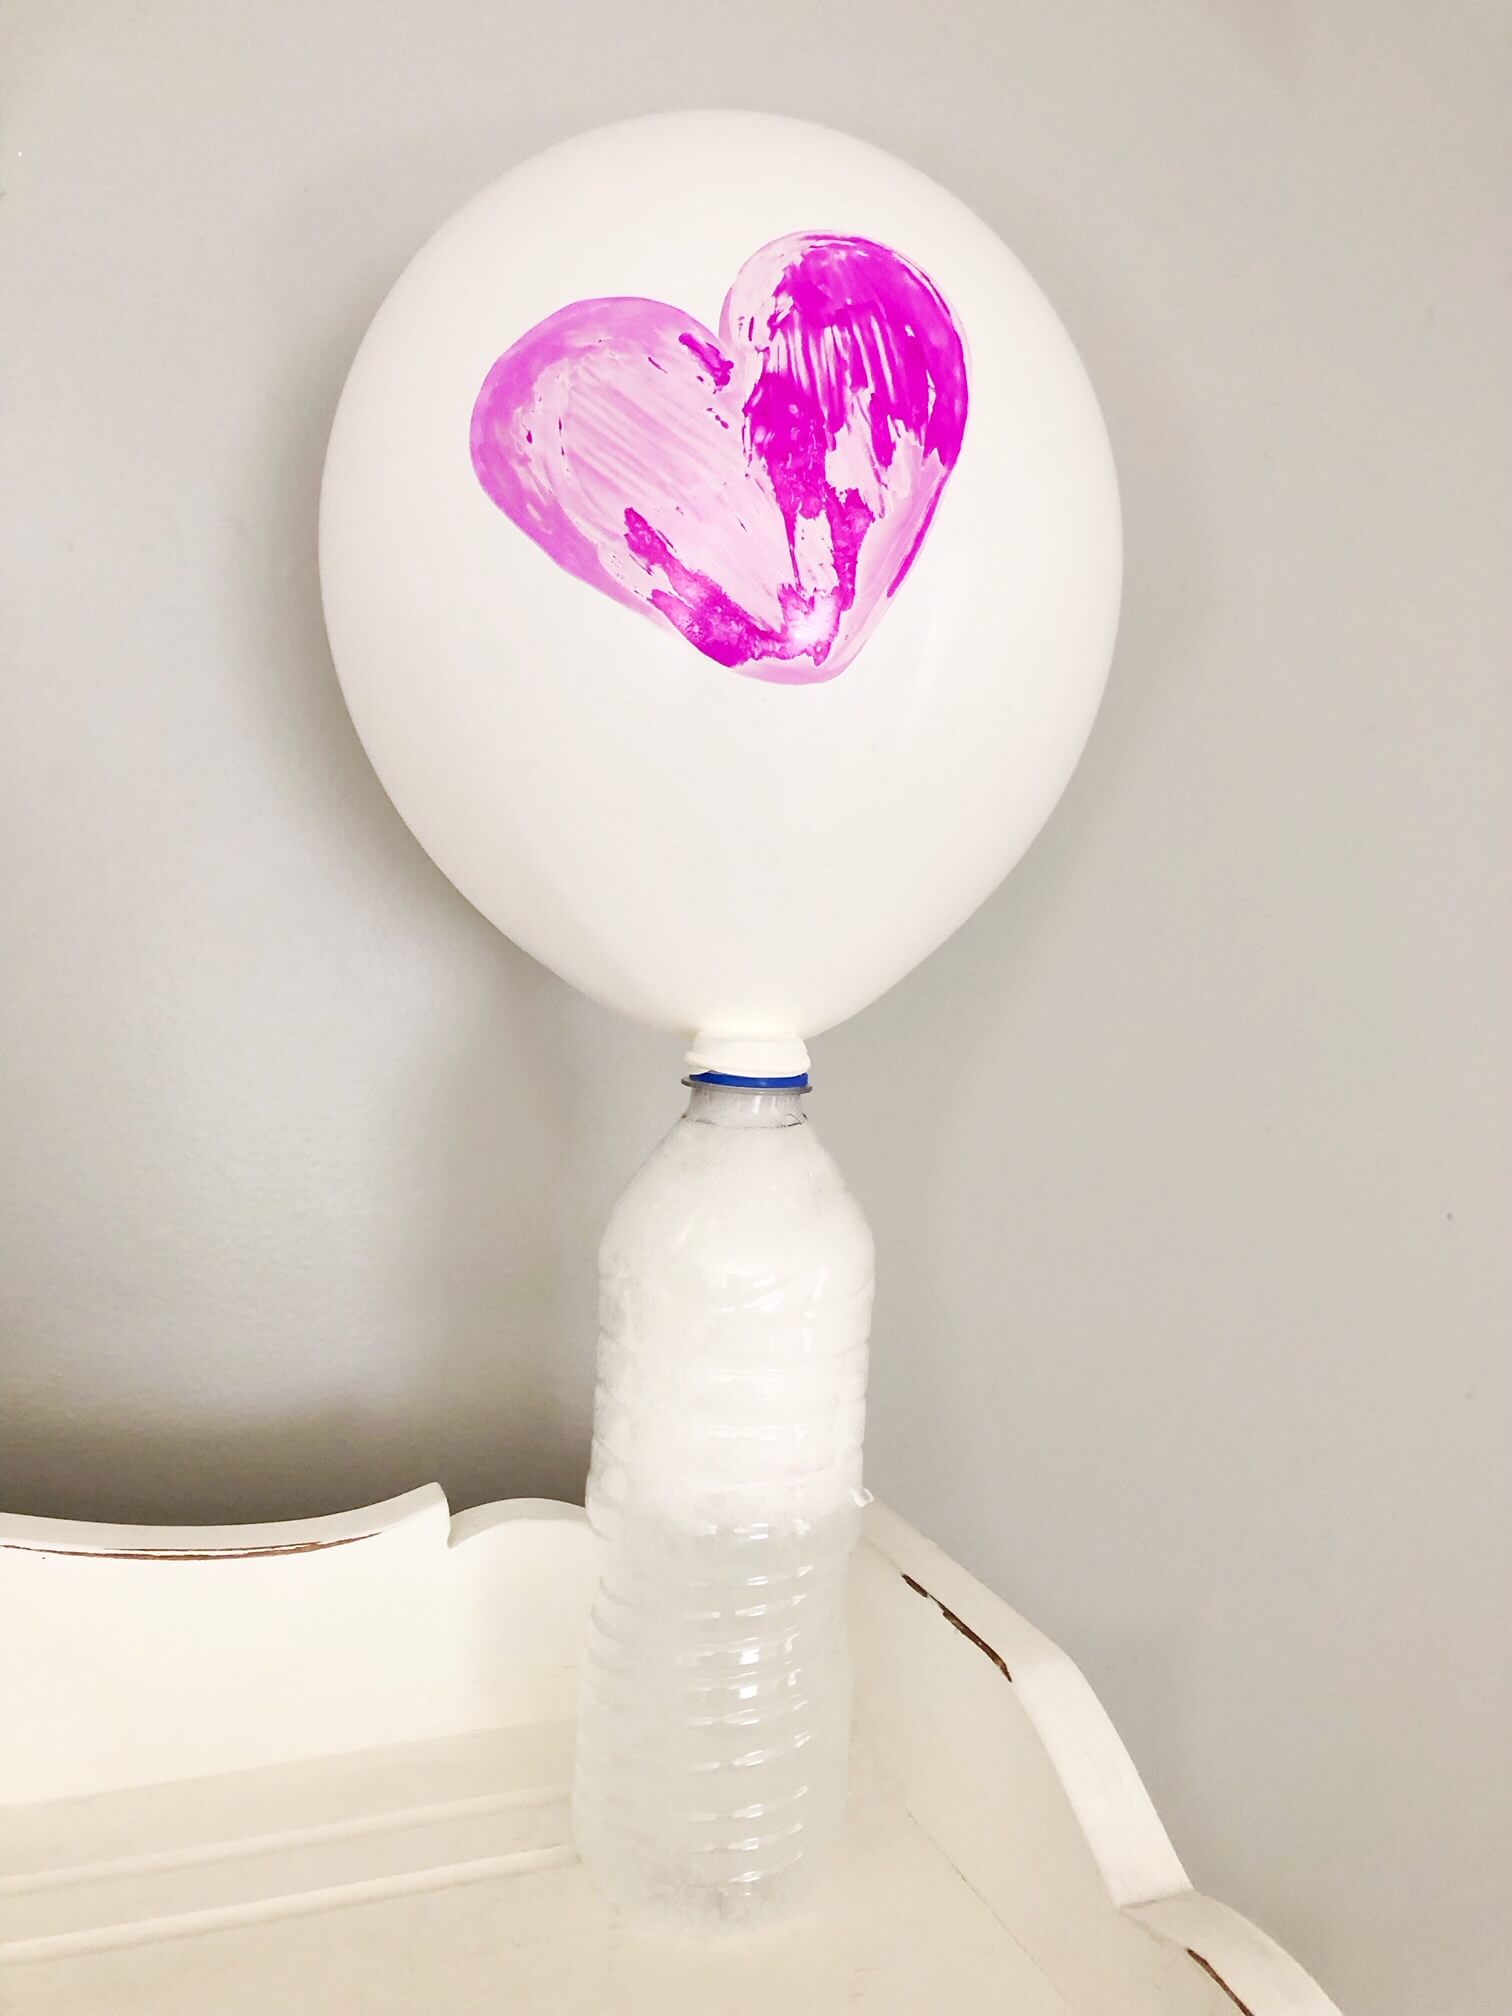 balloon blown up using baking soda and vinegar